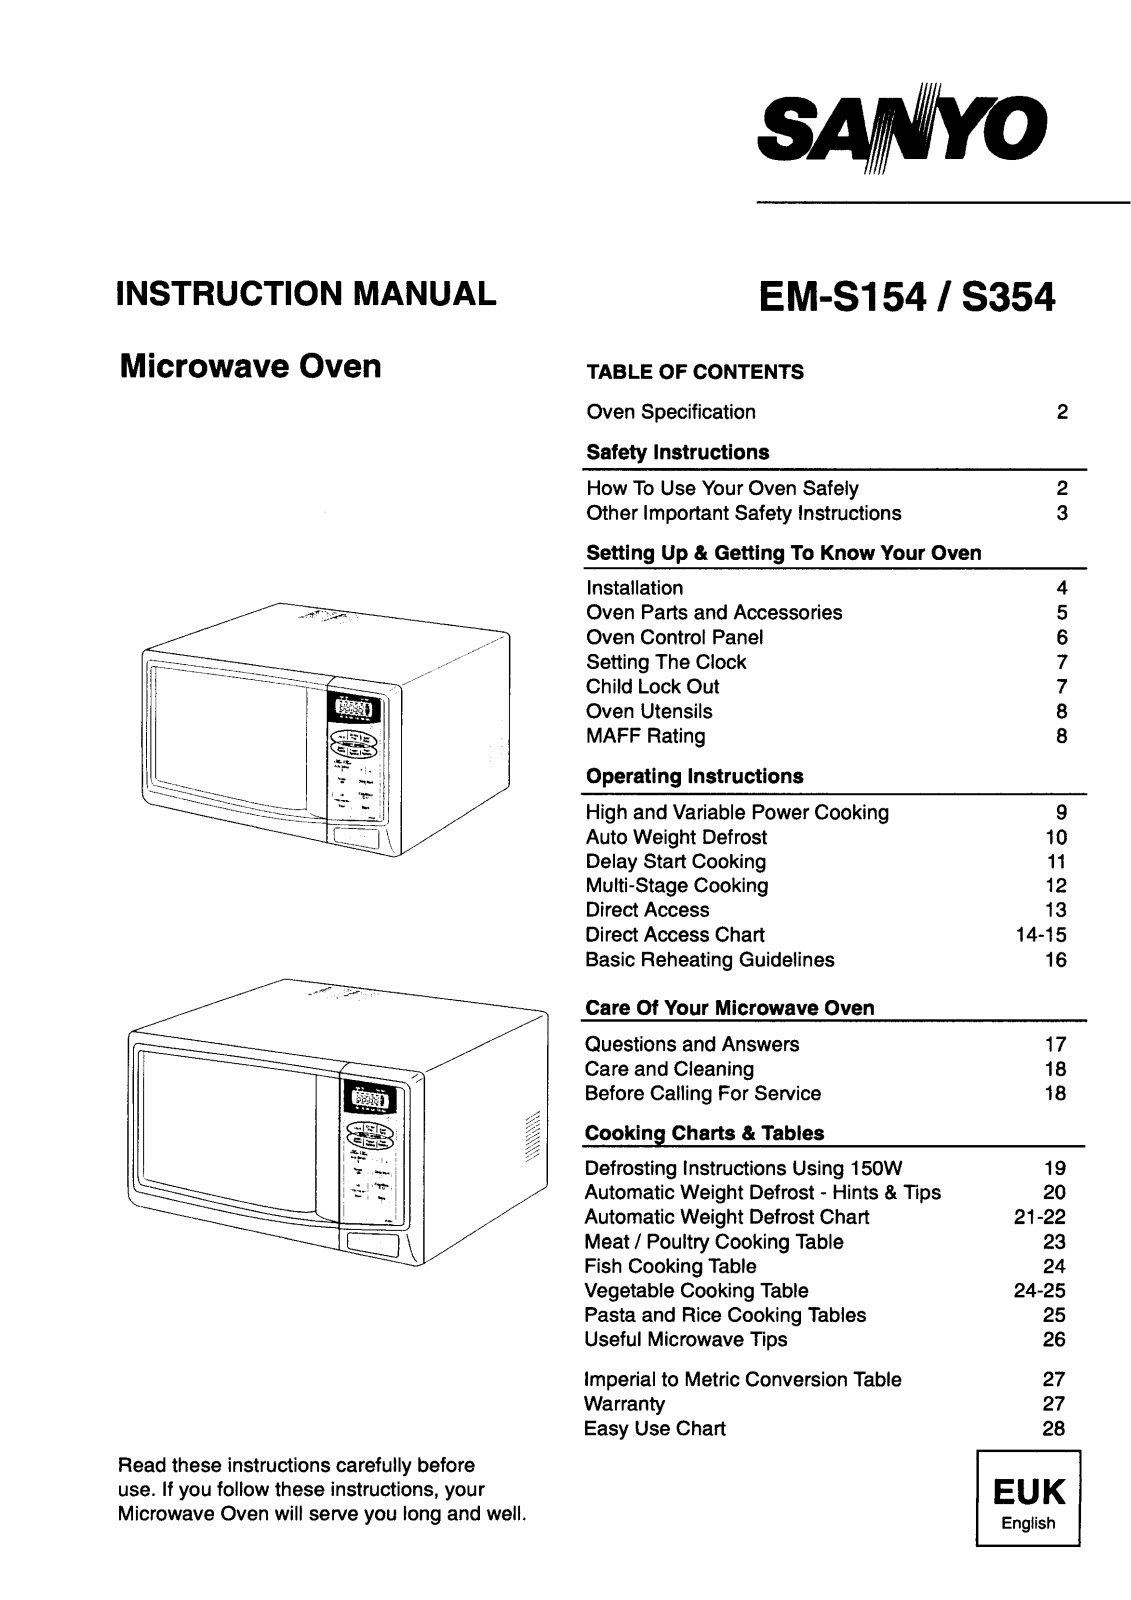 Sanyo EM-S354 Instruction Manual